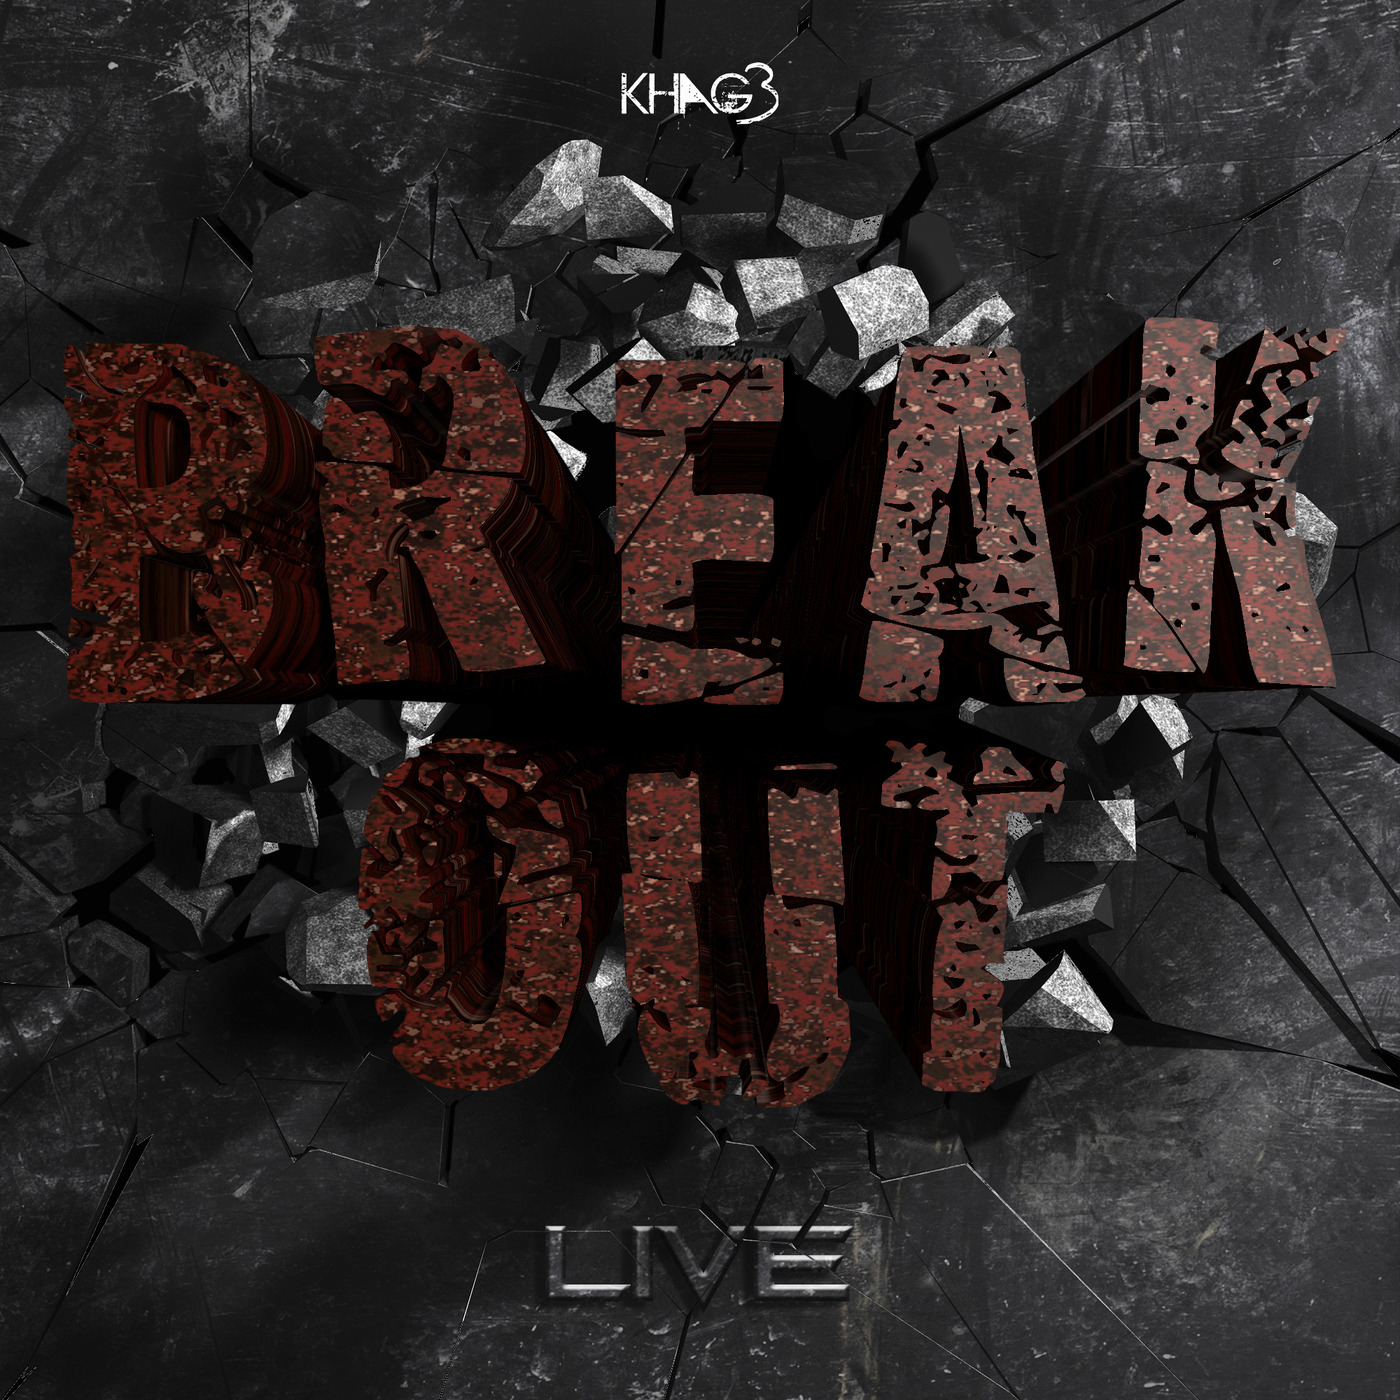 Break Out #Live - KHAG3 @ Proton Stuttgart